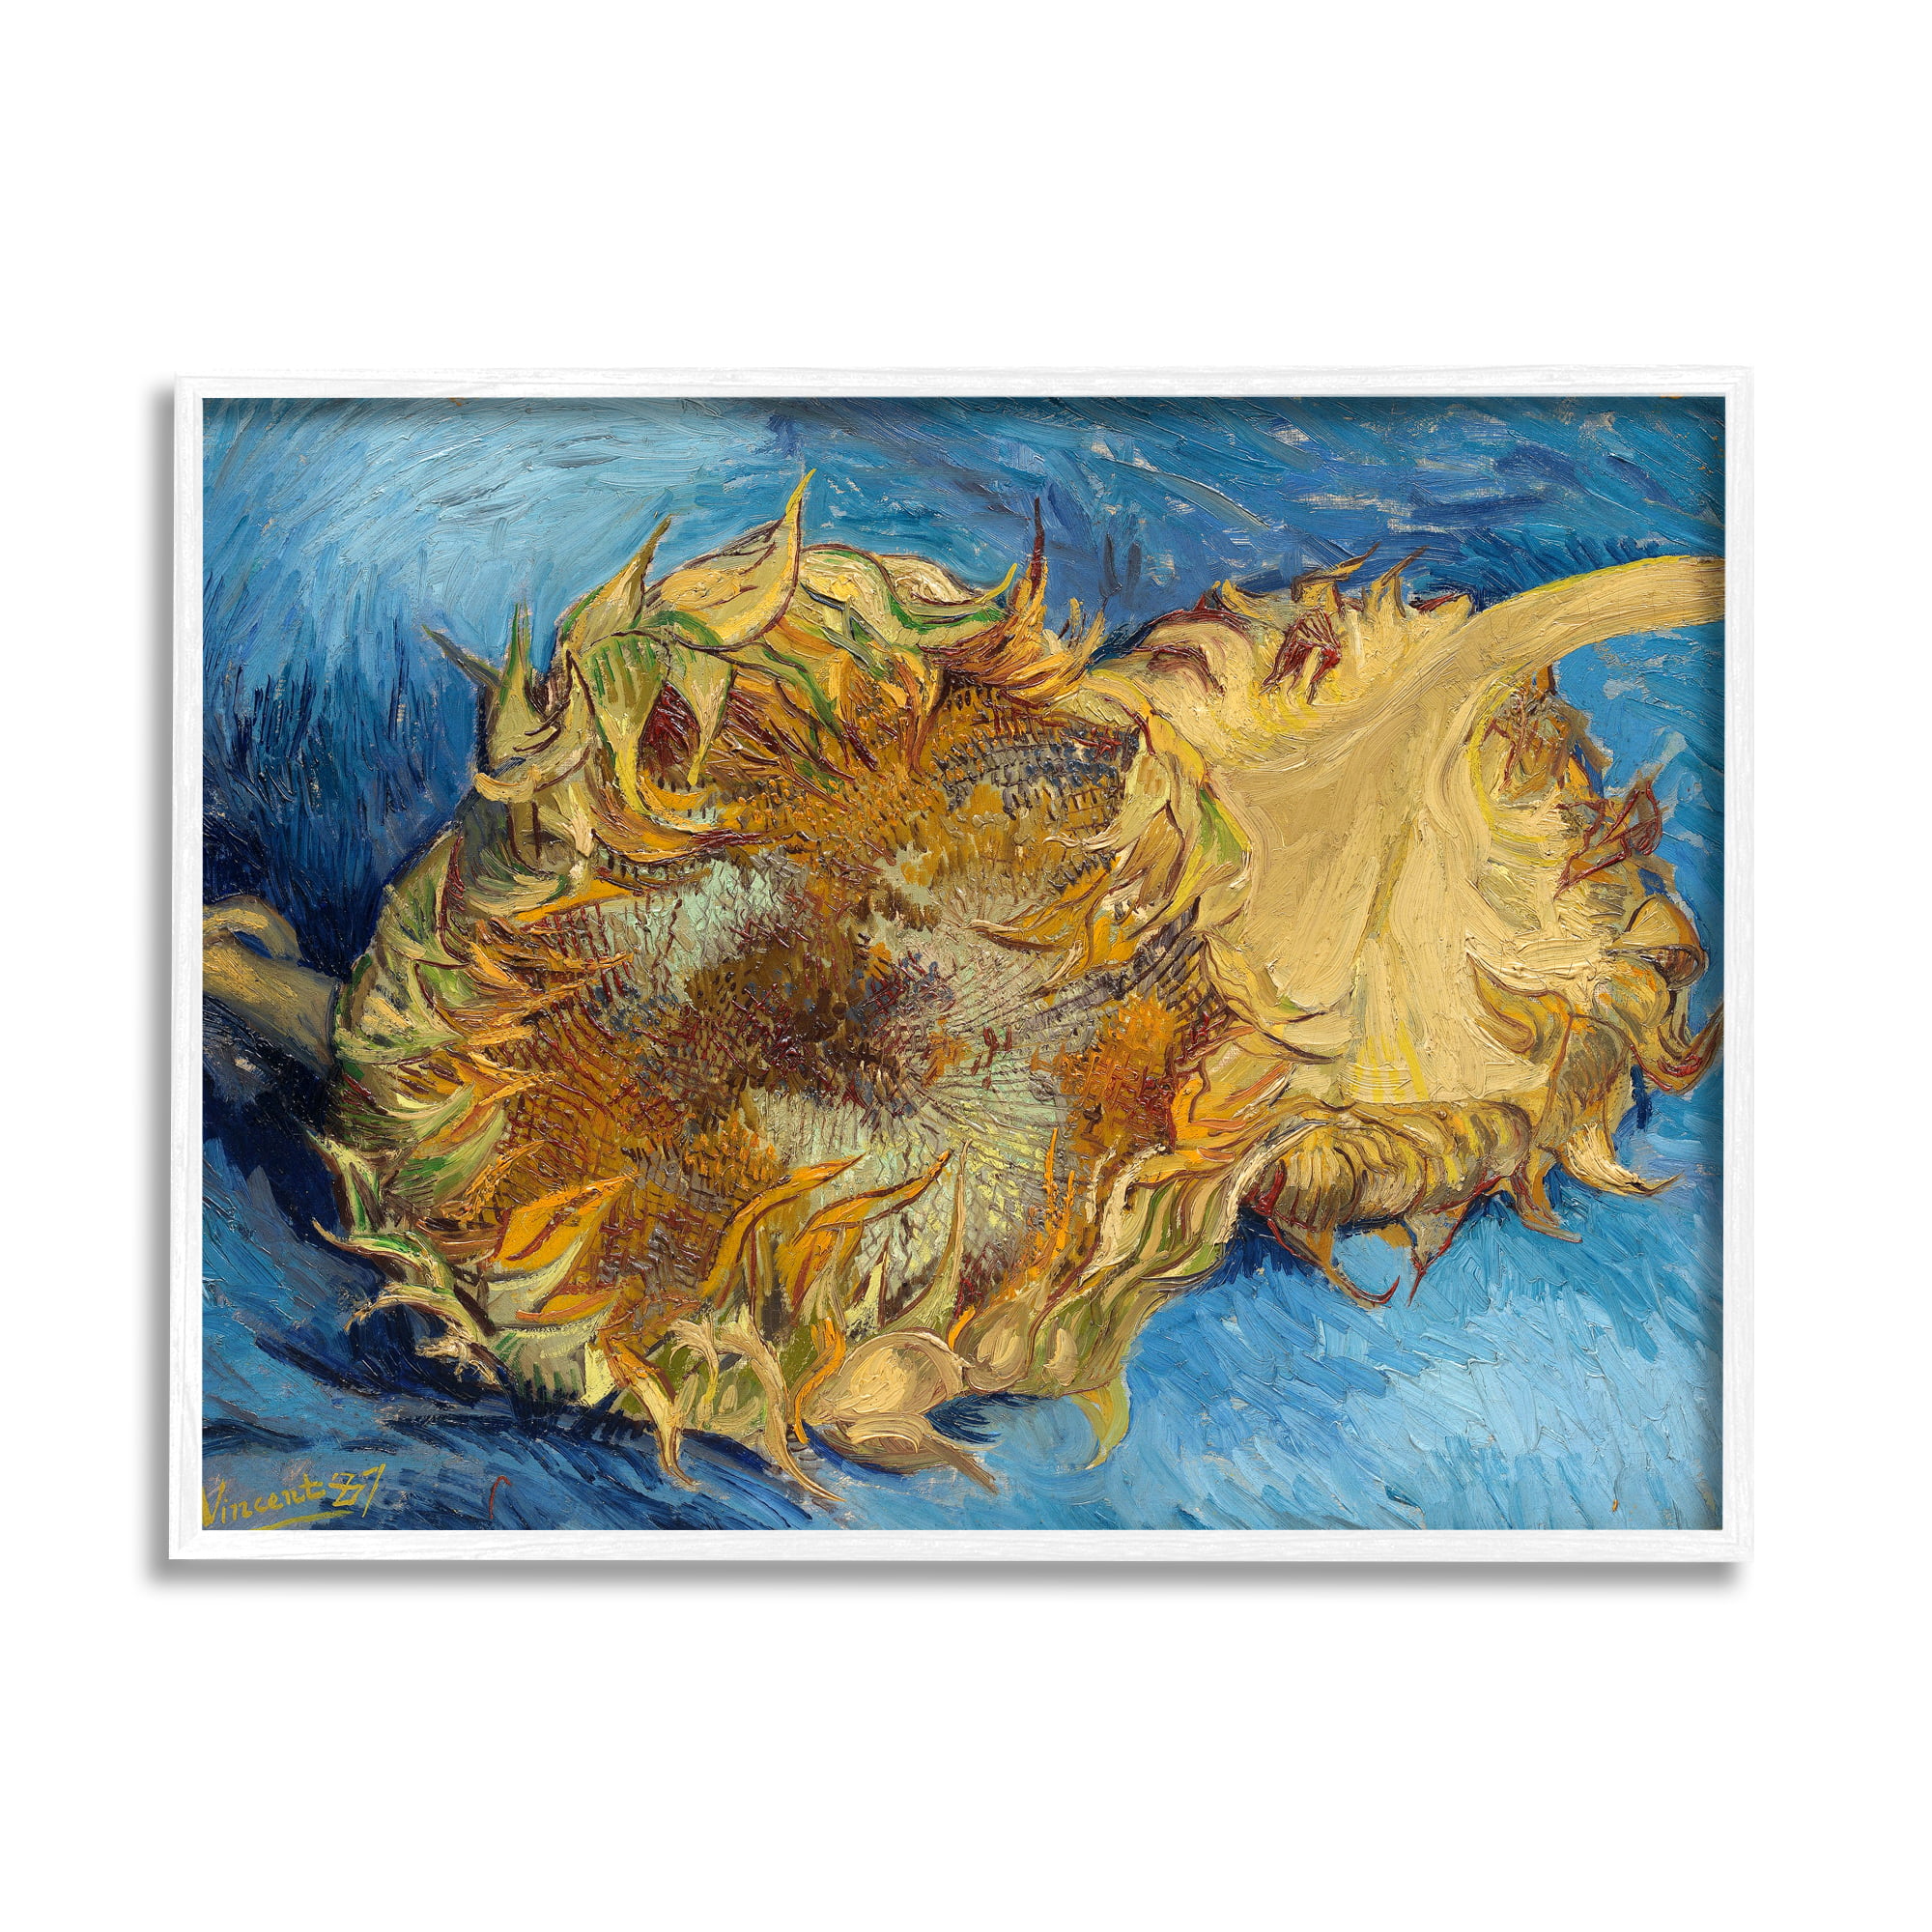 c1888-9 — Giclee Fine Art Print "Sunflowers" Vincent van Gogh 